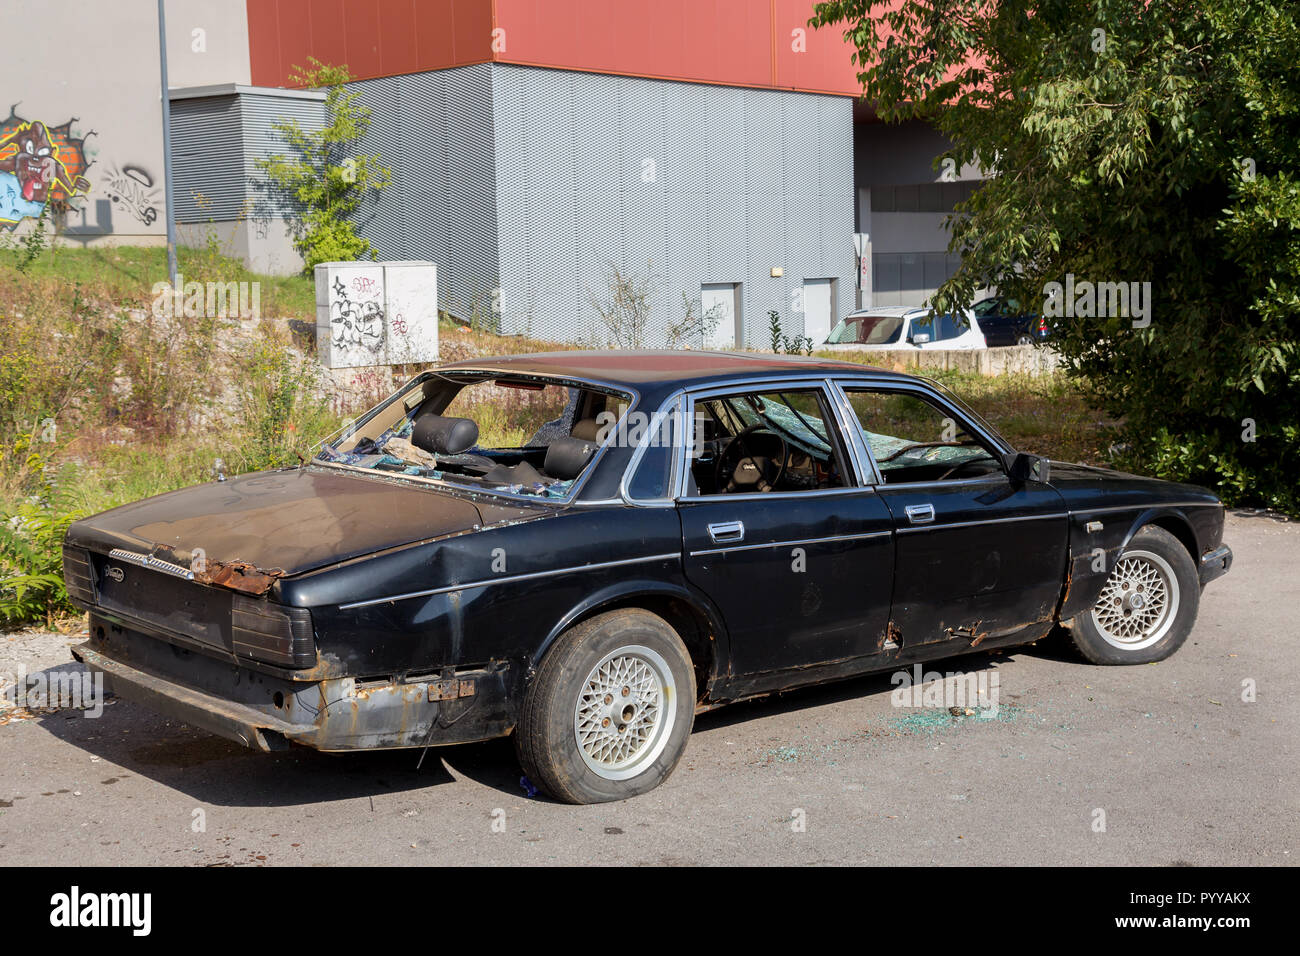 Abandon on the street Rusty Daimler Six/Jaguar XJR with Broken Windshield Stock Photo